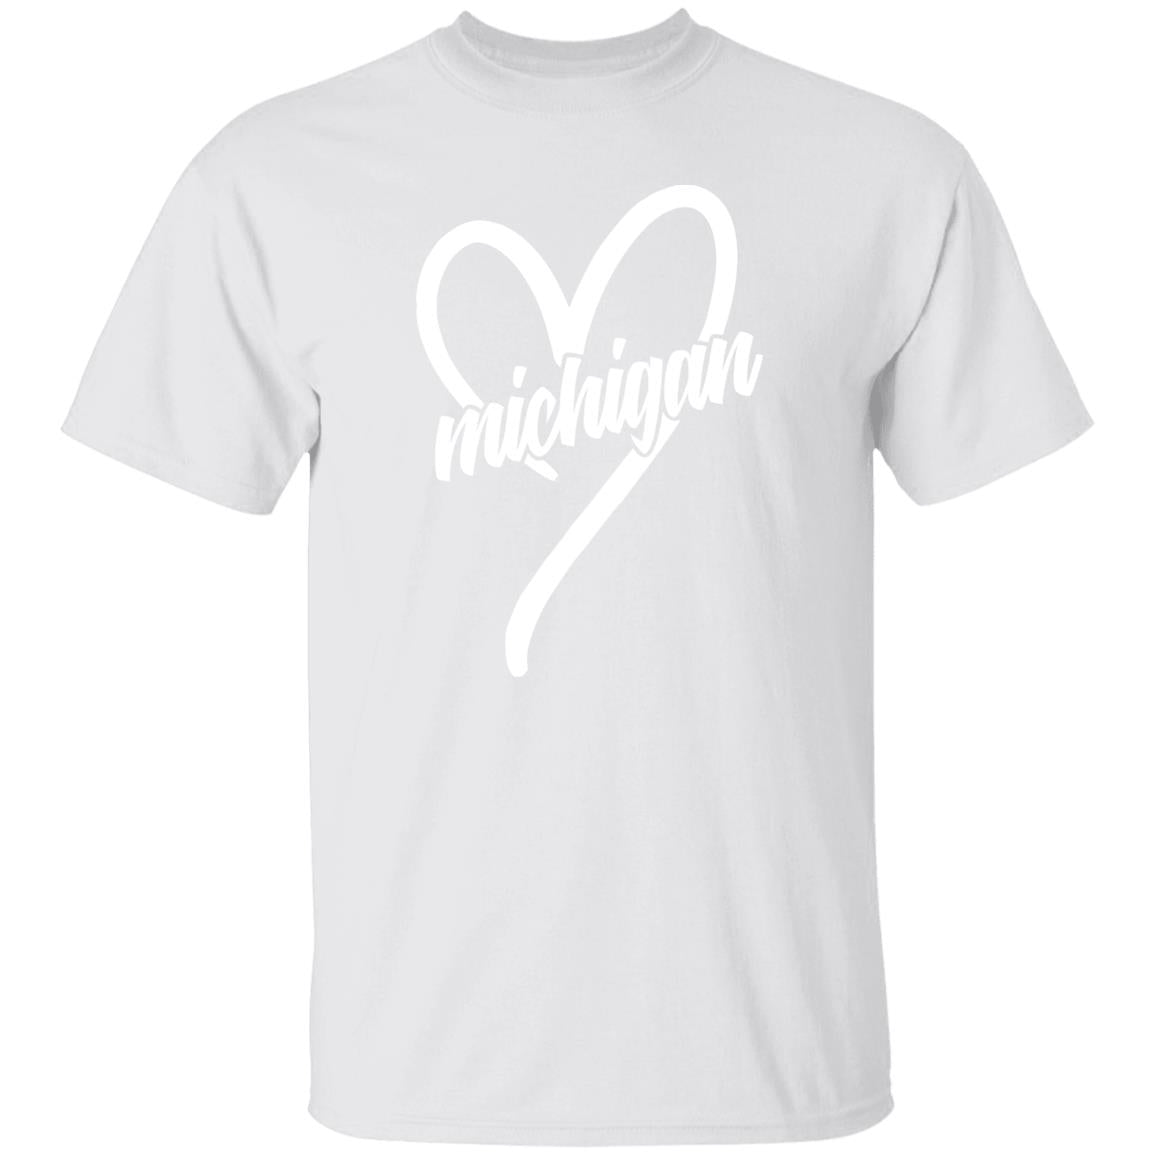 Michigan Heart - White G500 5.3 oz. T-Shirt